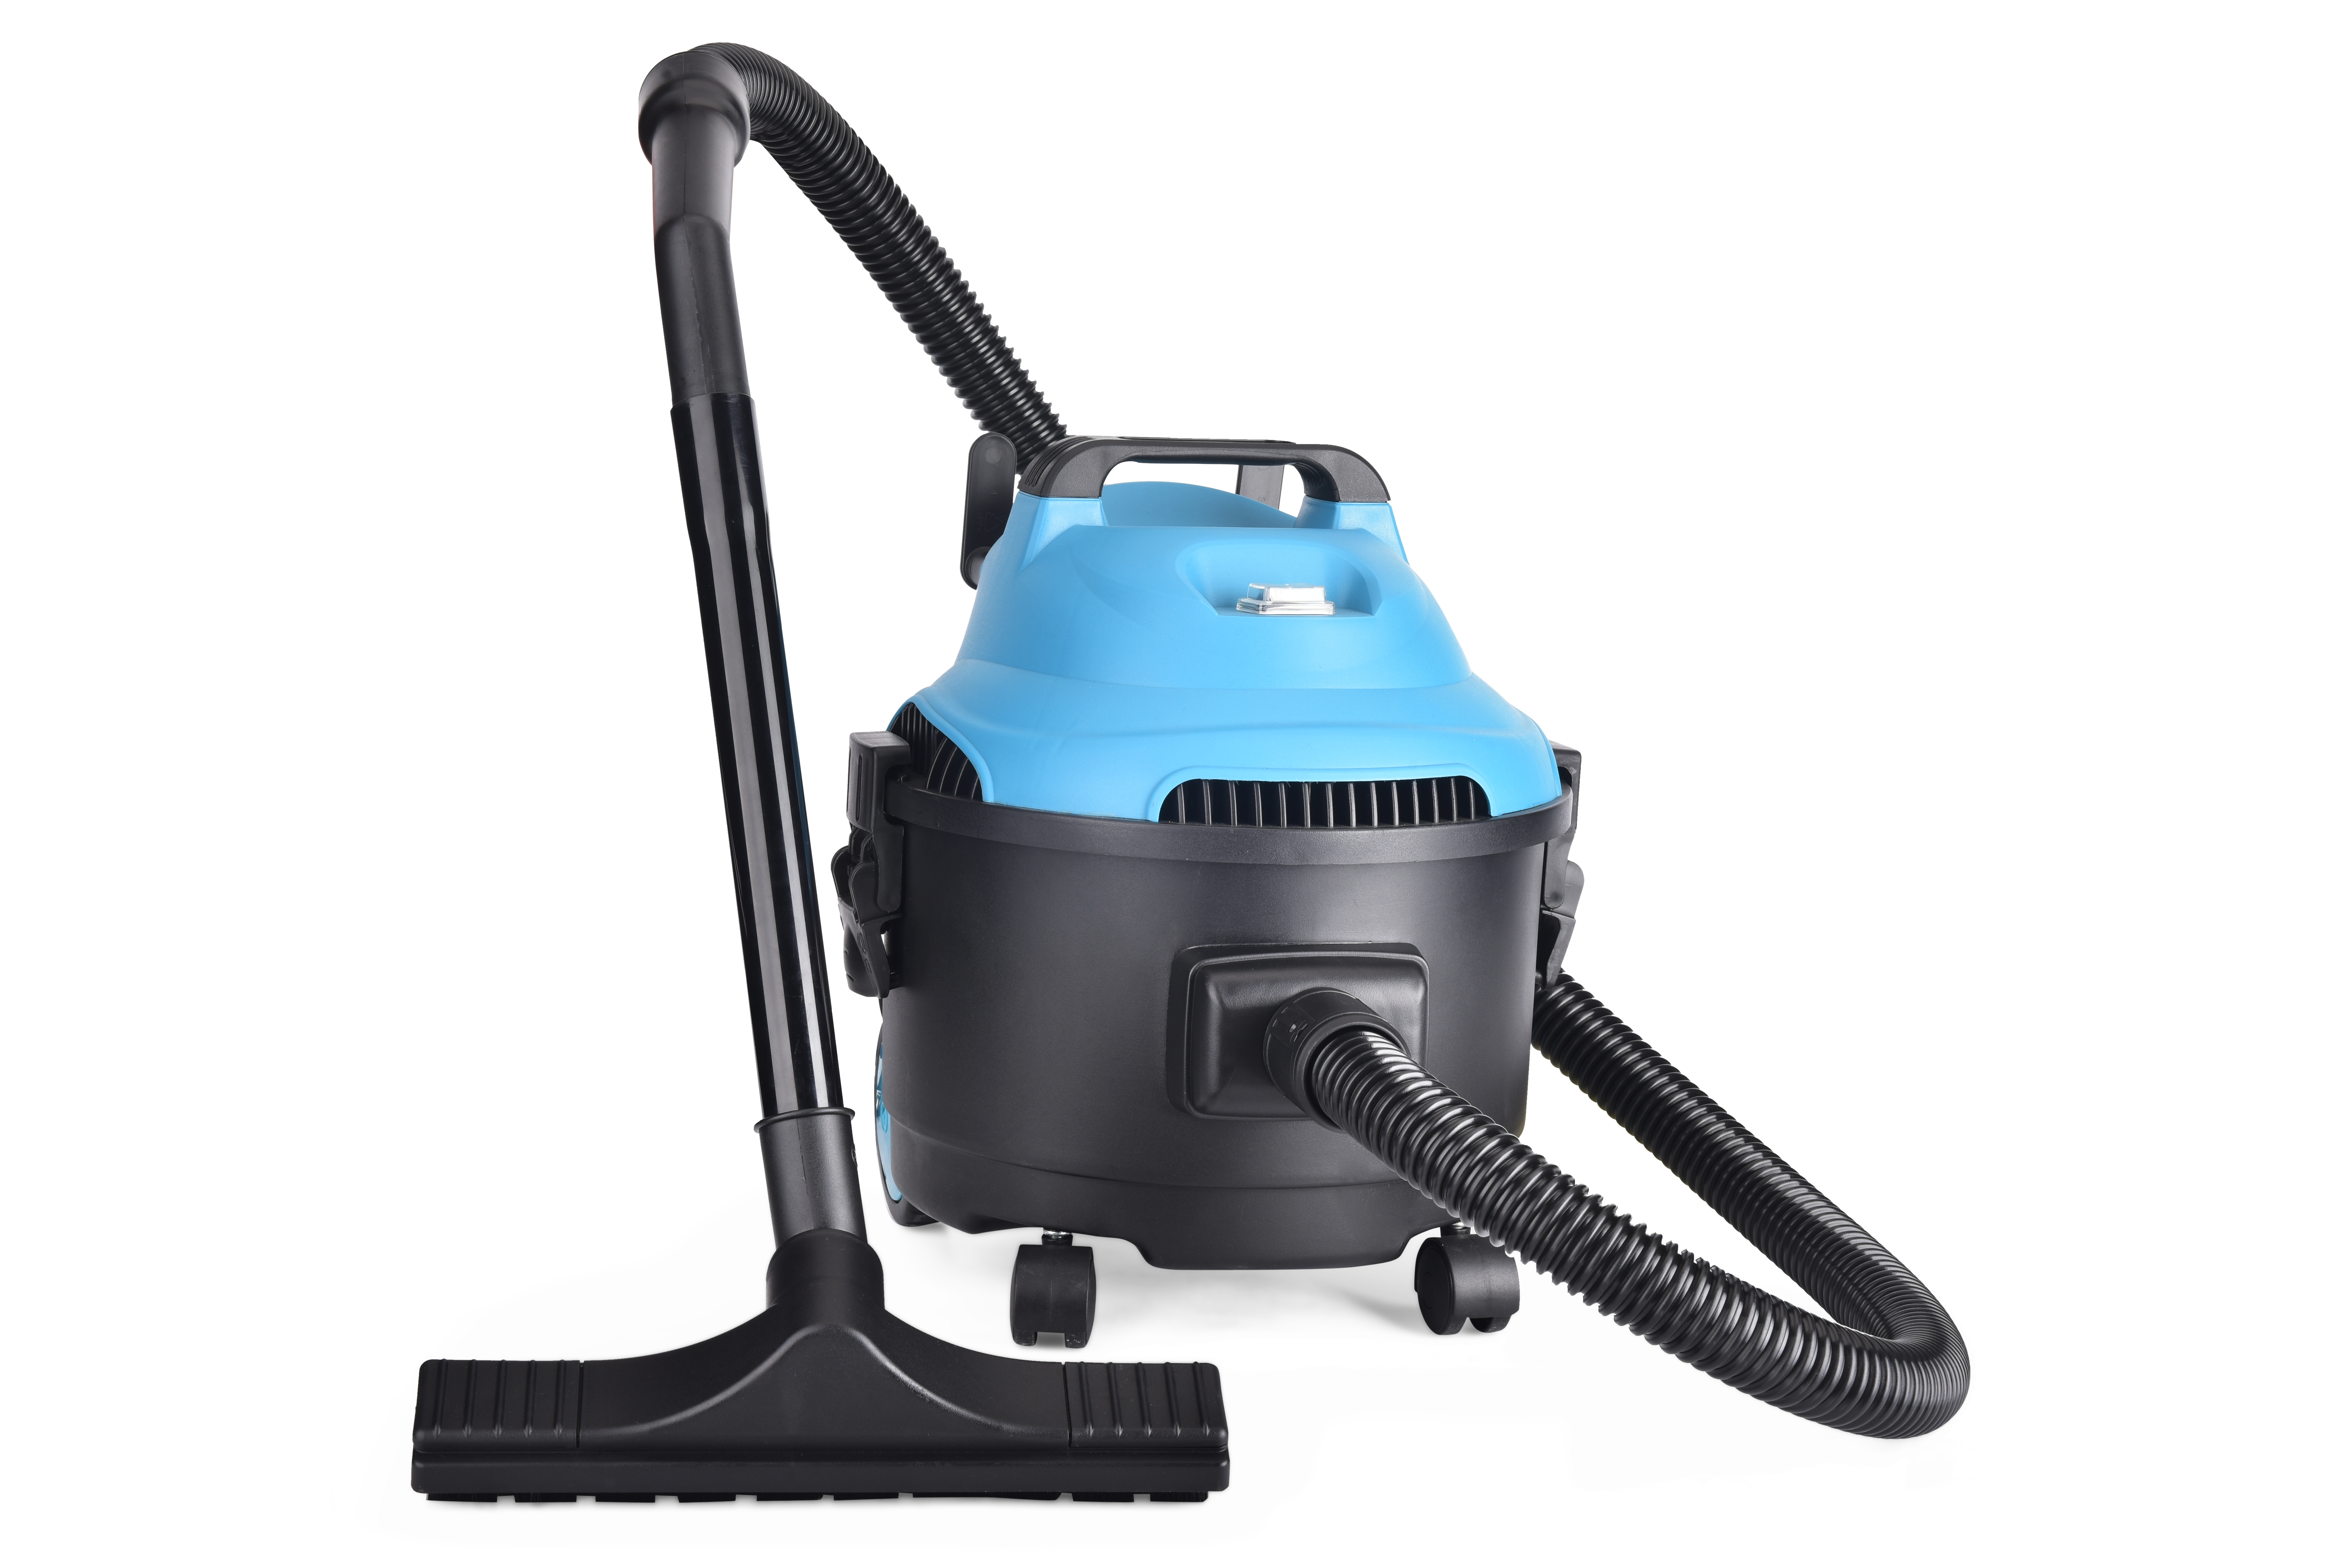 RL175 hot selling model 1200W vacuum cleaner